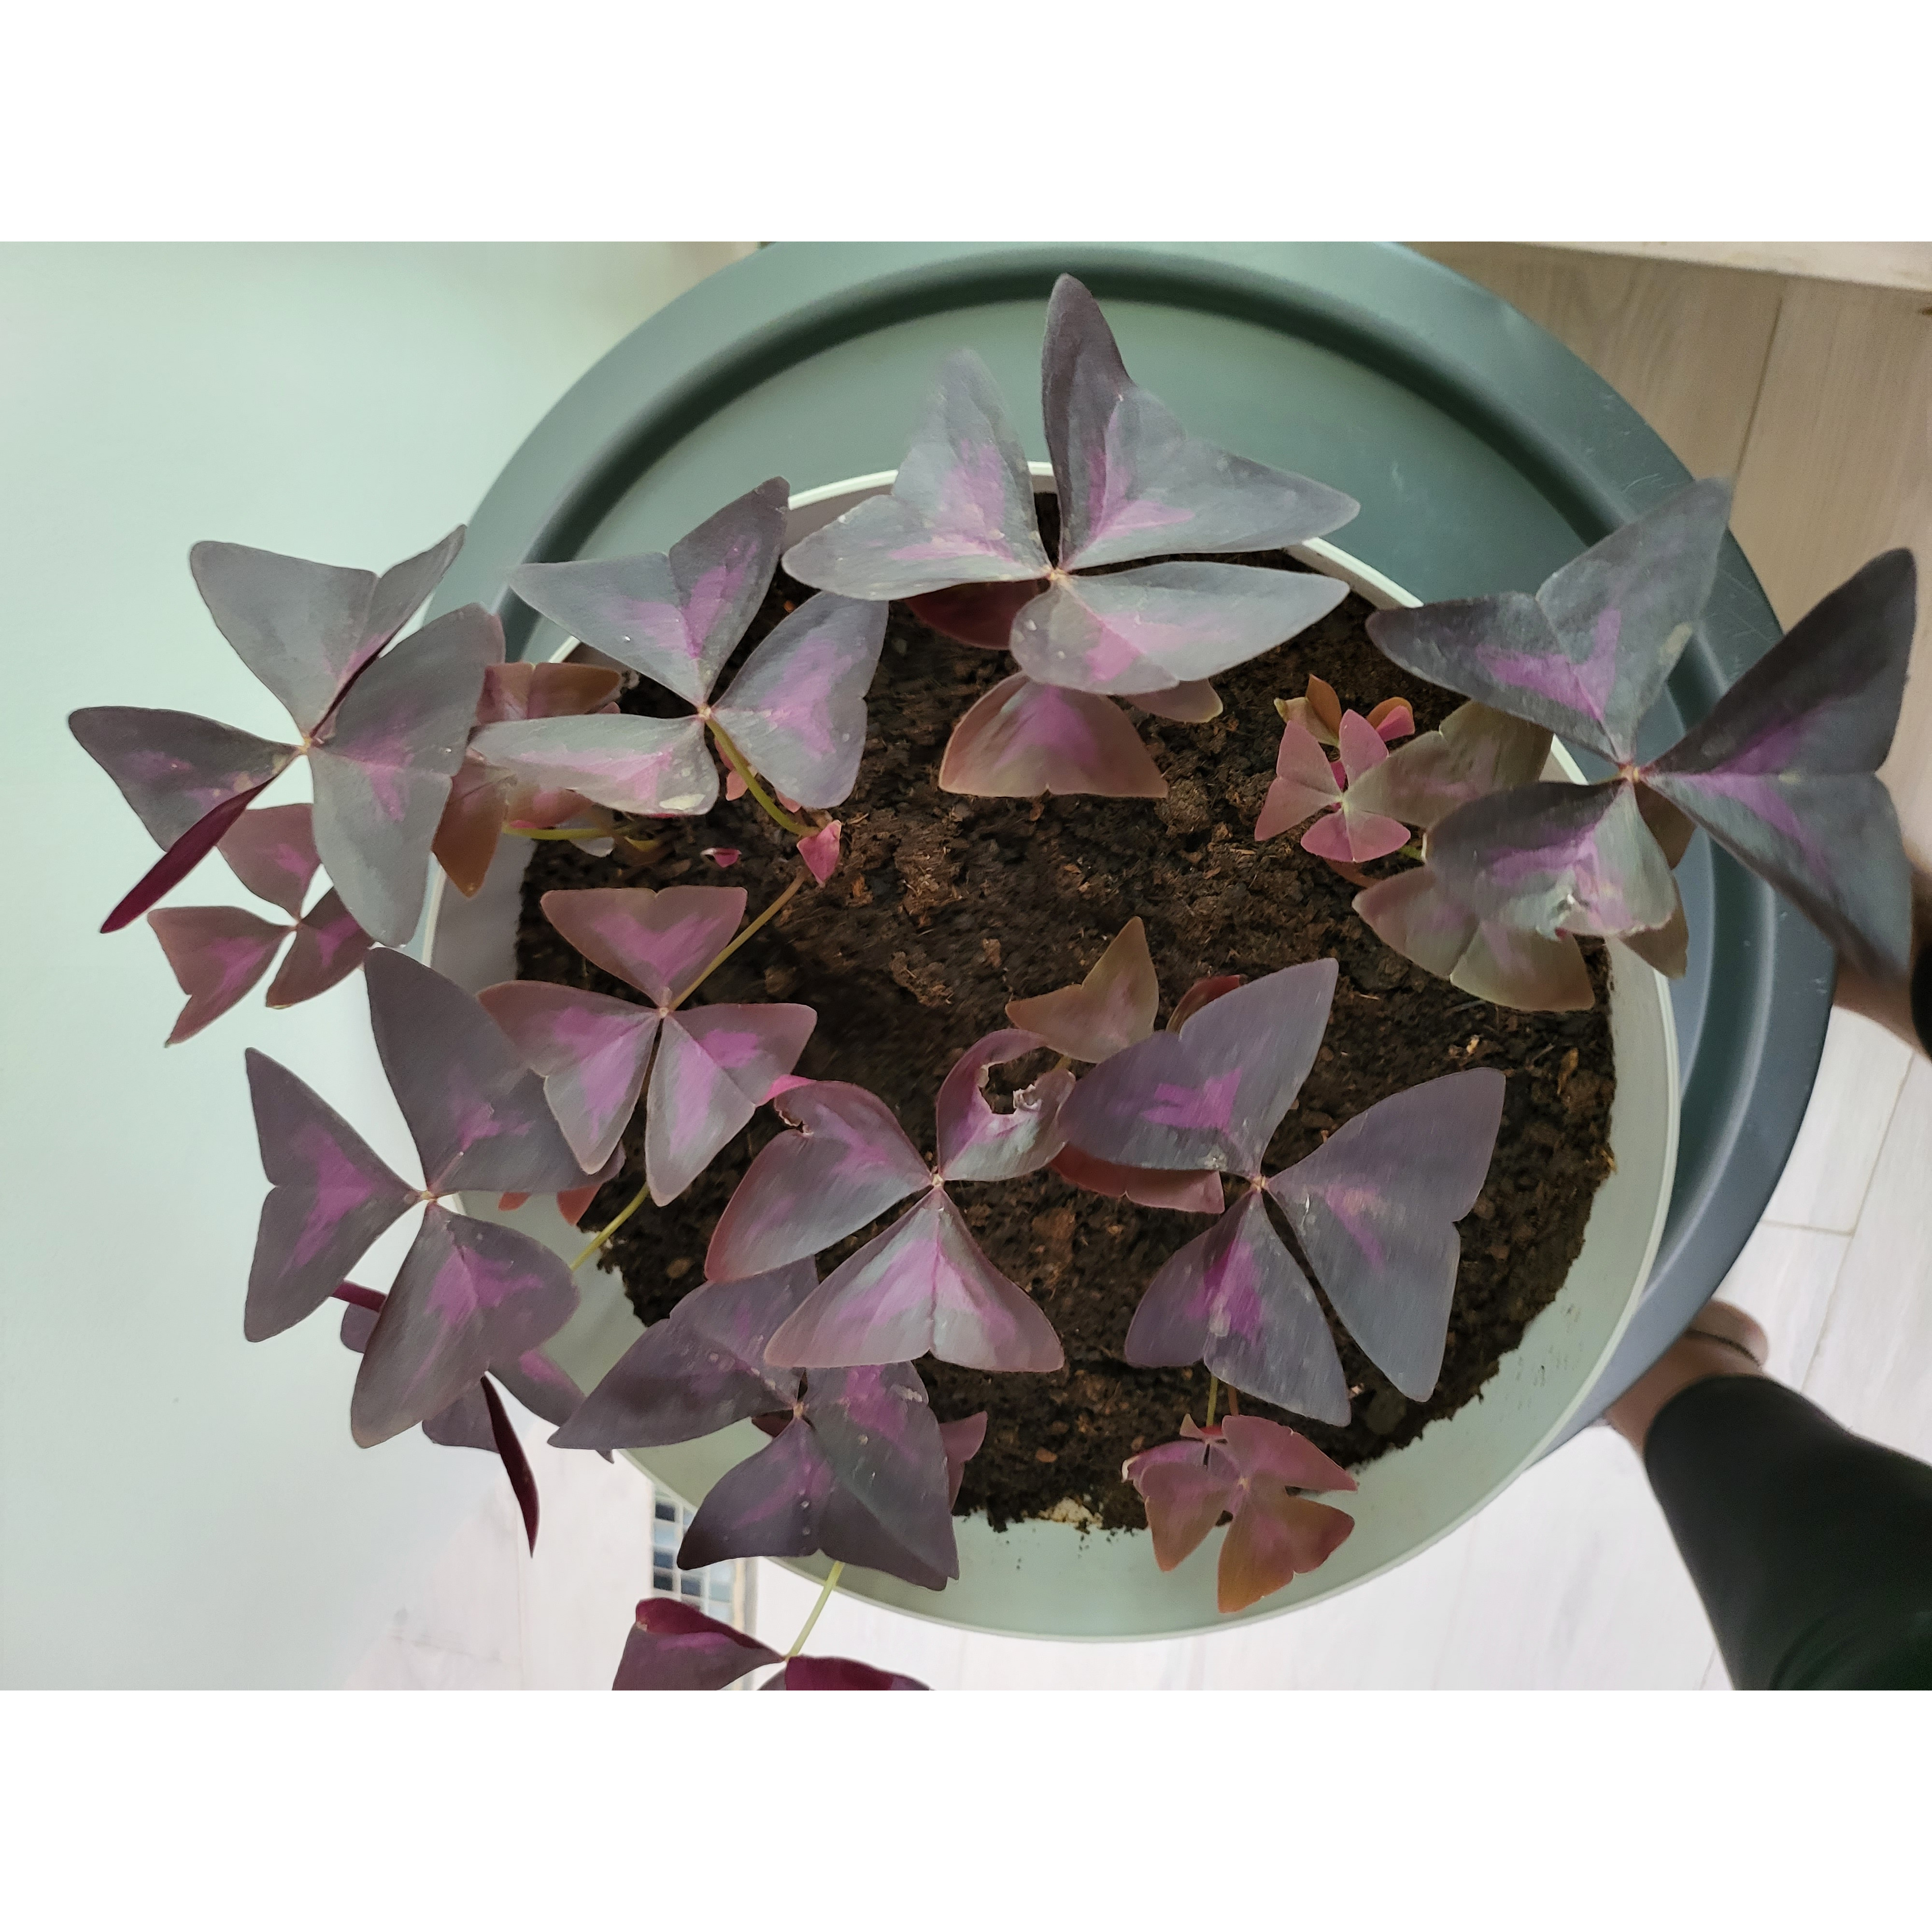 Cultiver les bulbes d'Oxalis Triangularis